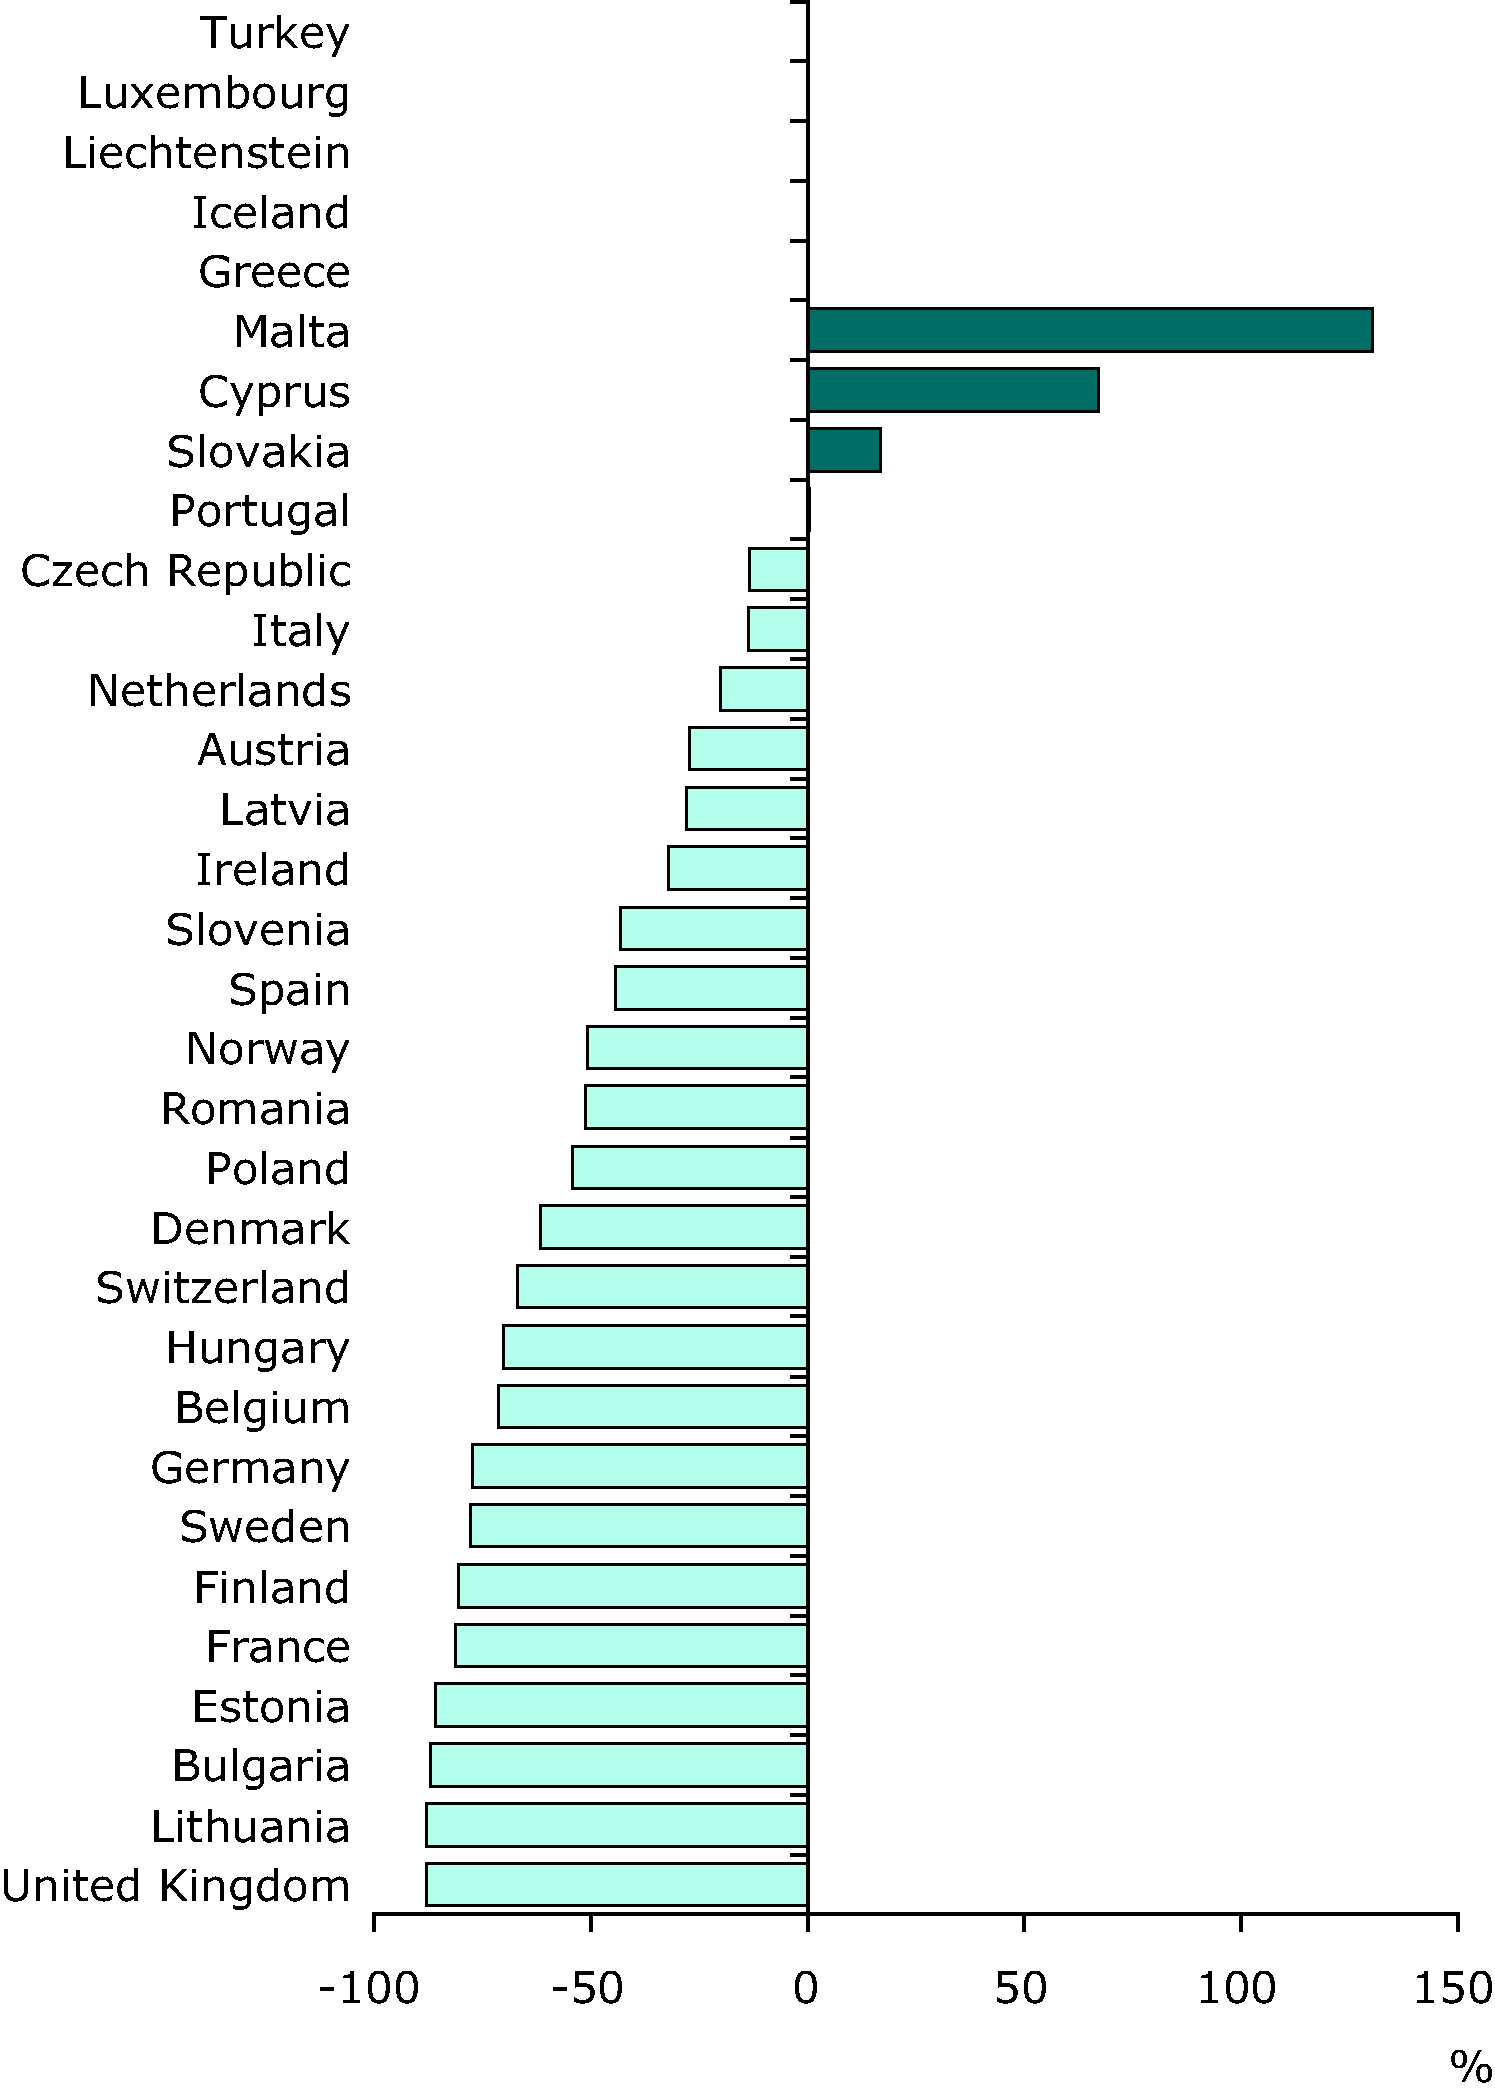 Change (%) in cadmium emissions 1990-2008 (EEA member countries)